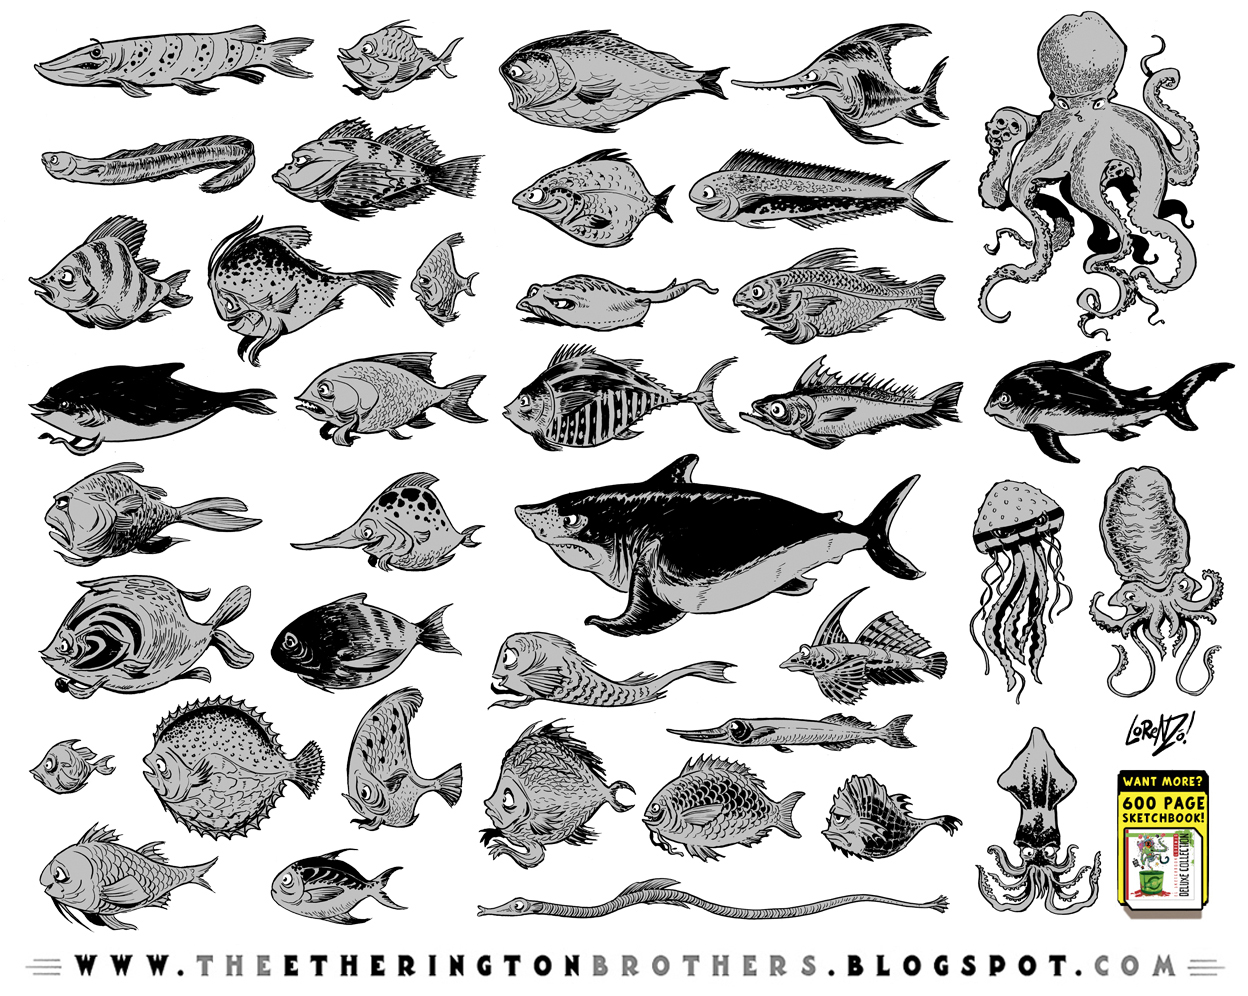 39 fish character designs